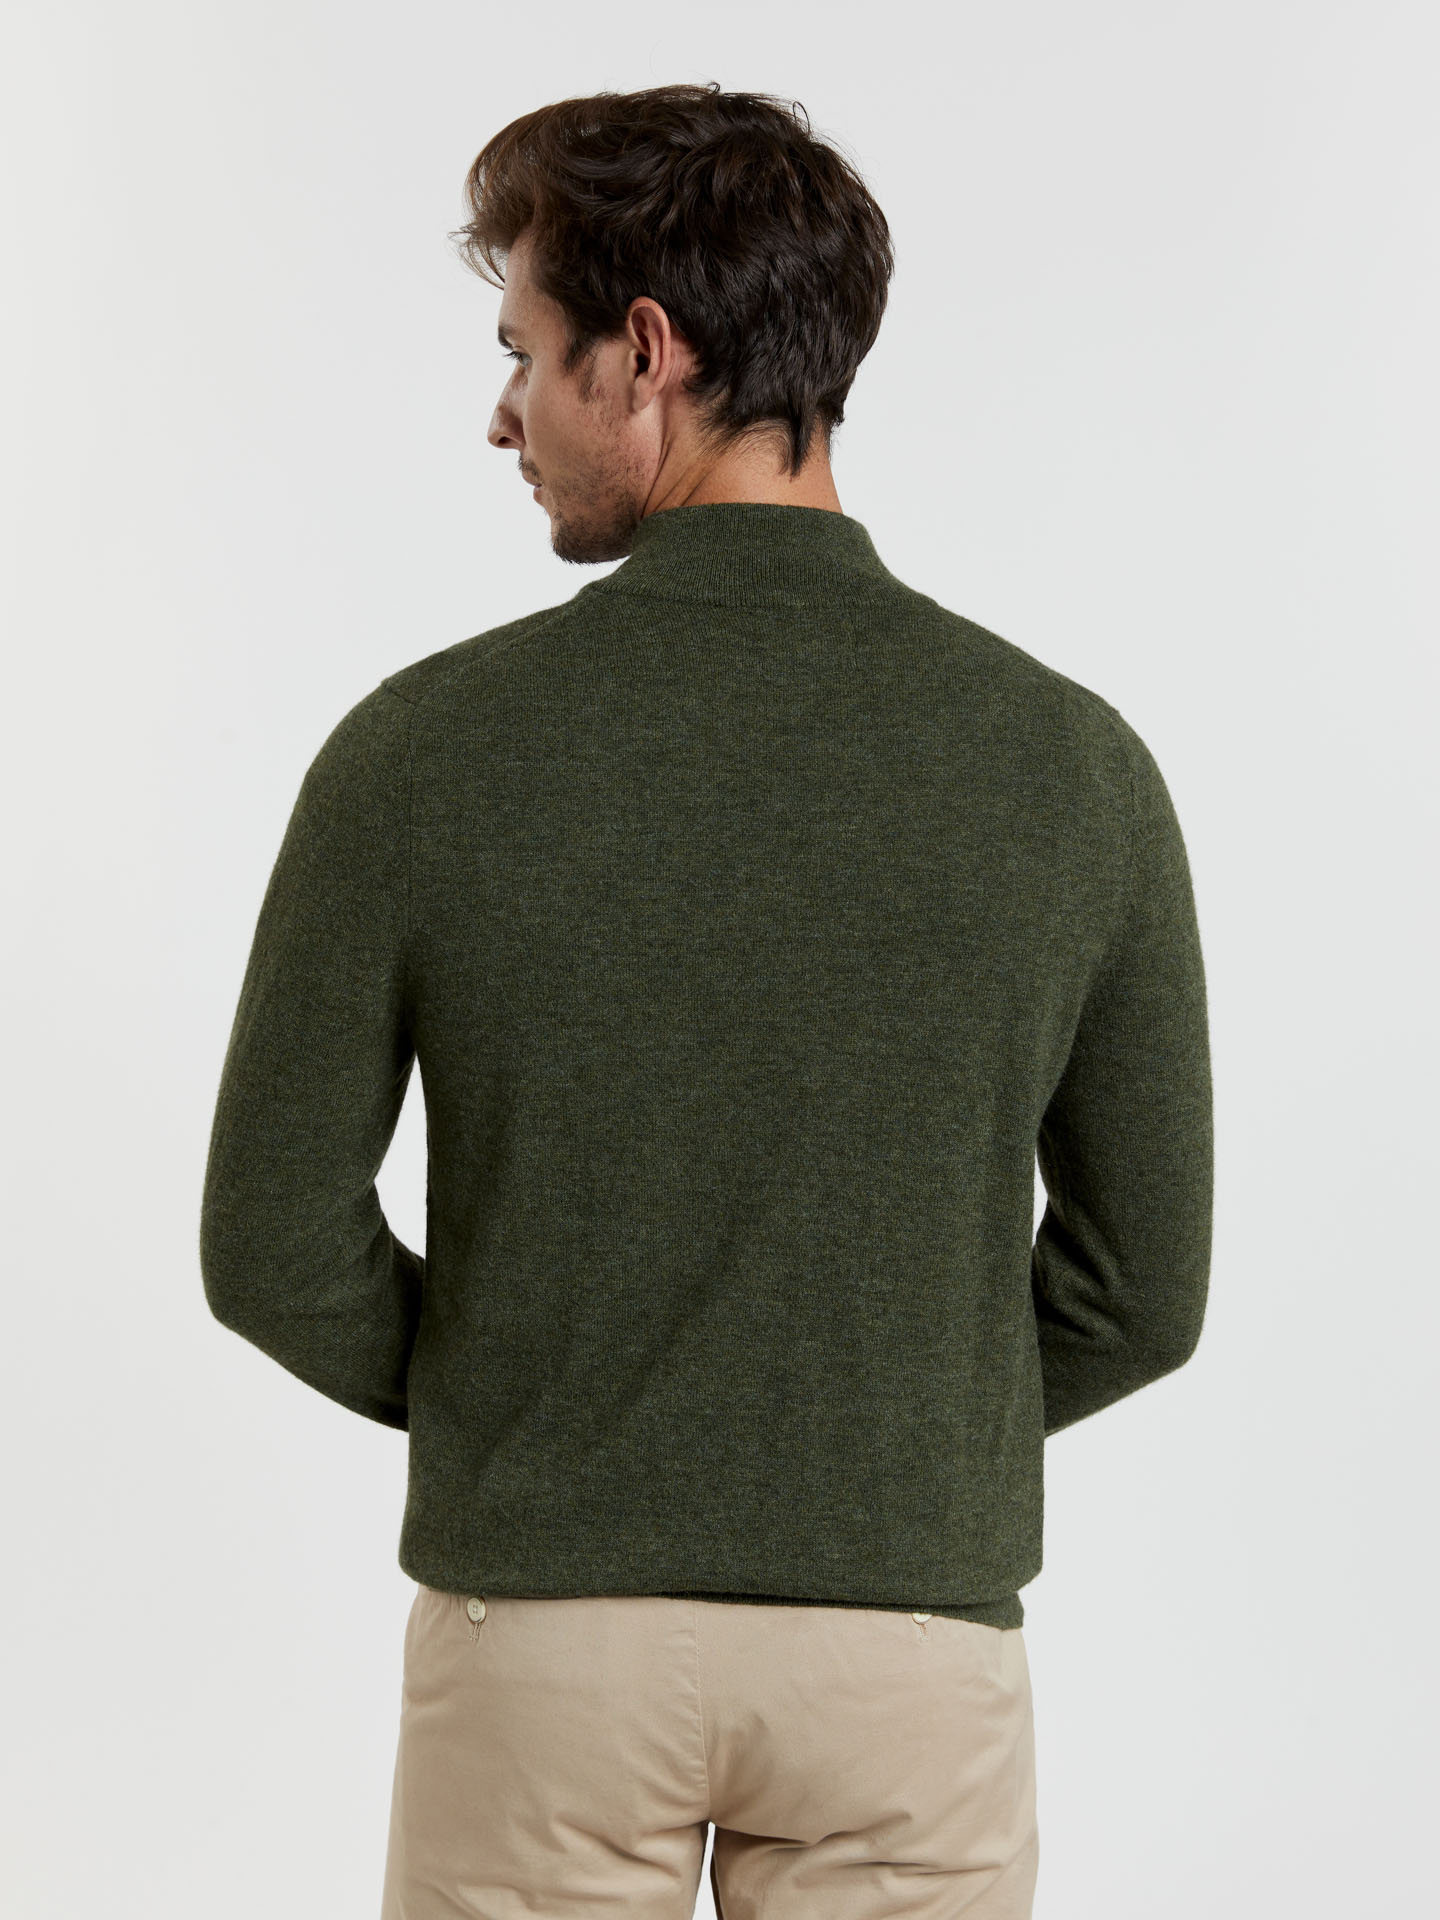 Sweater Khaki Casual Man